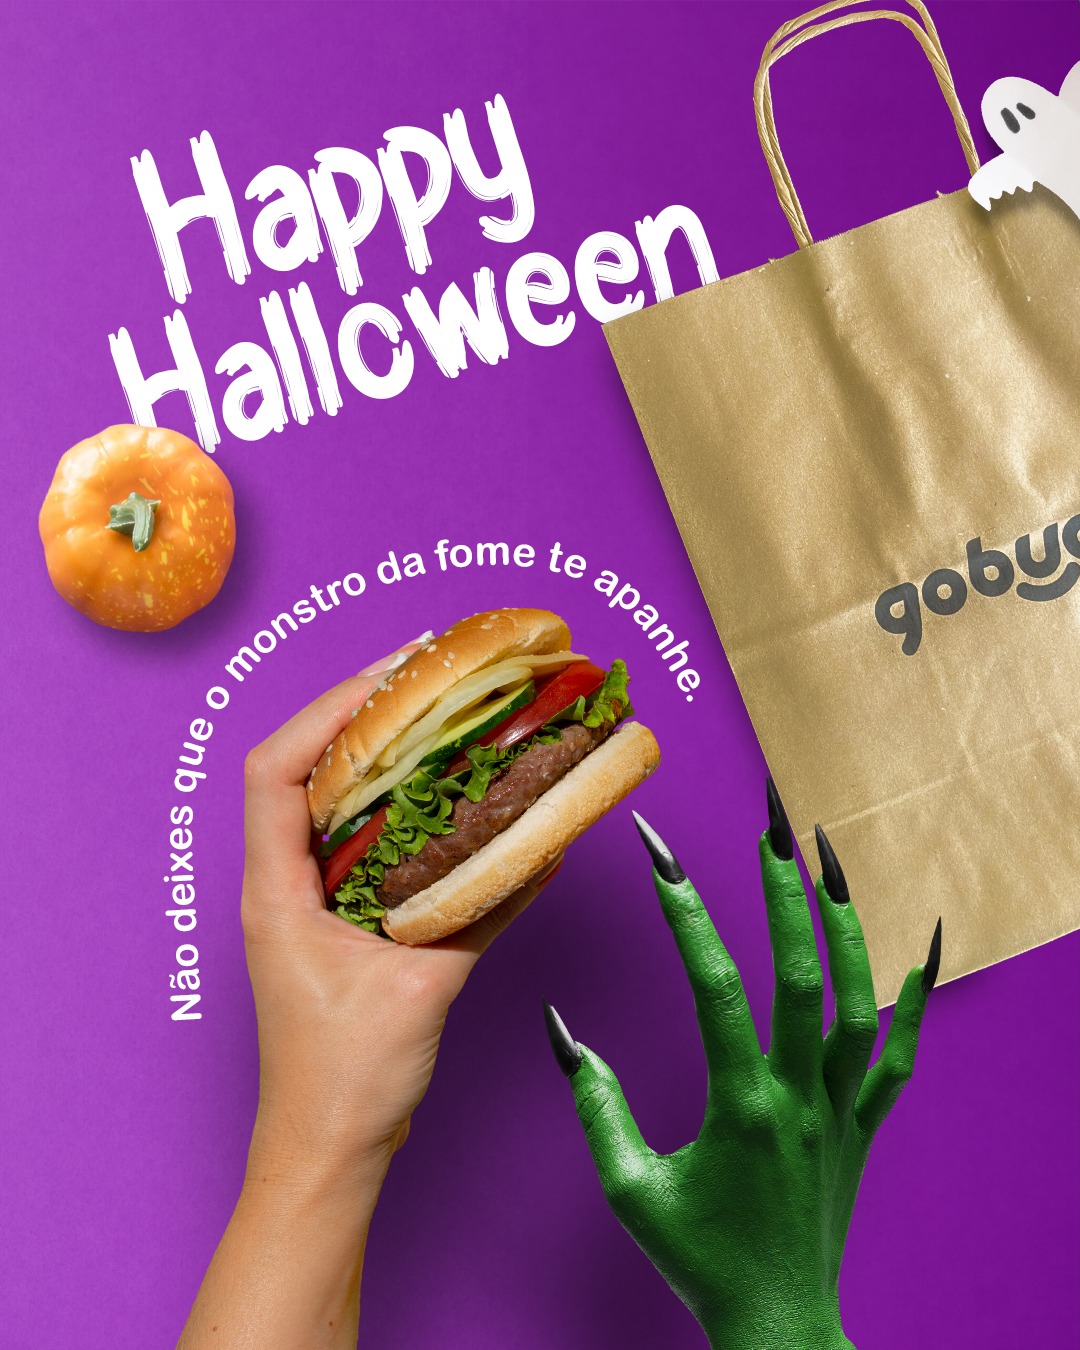 Happ Halloween GoBuddy App